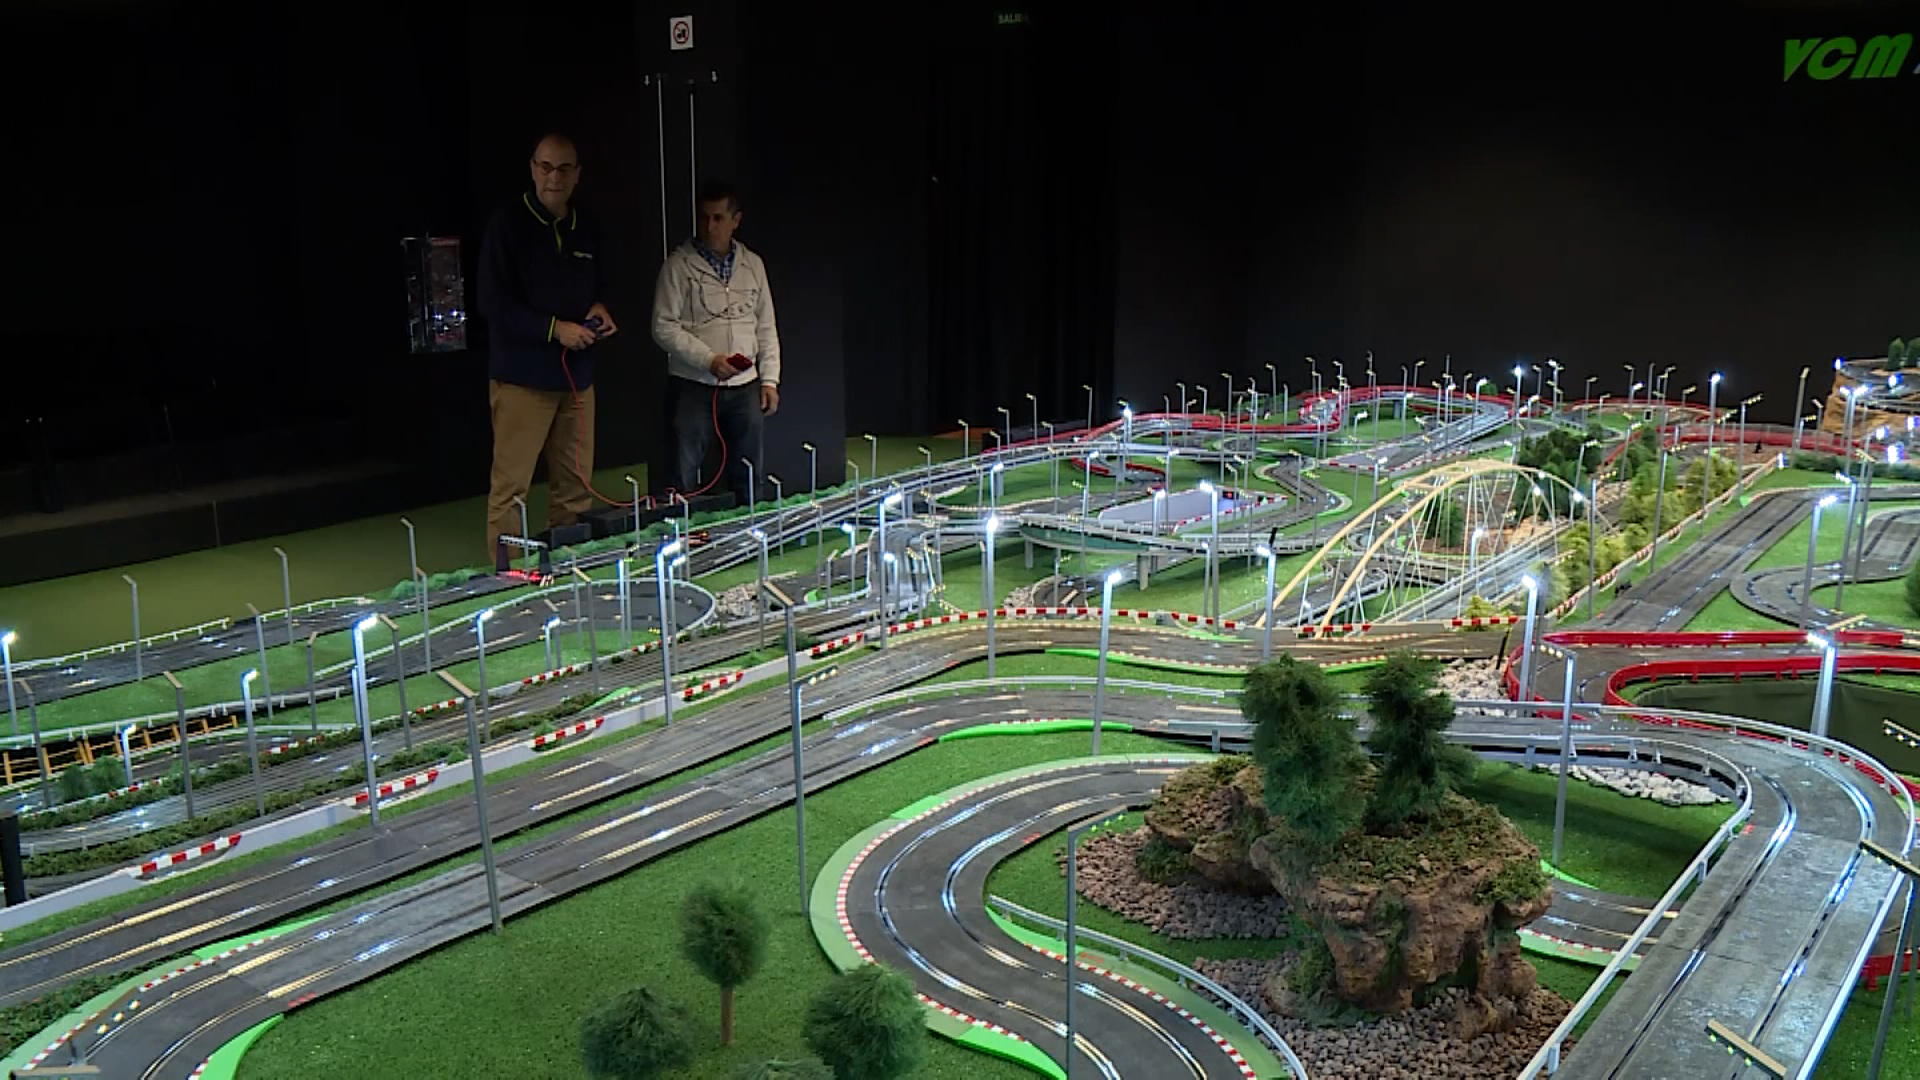 Sumergido Separar Agrícola Conoce esta enorme pista de carreras de 227 metros para autos de juguete  creada en España - CNN Video